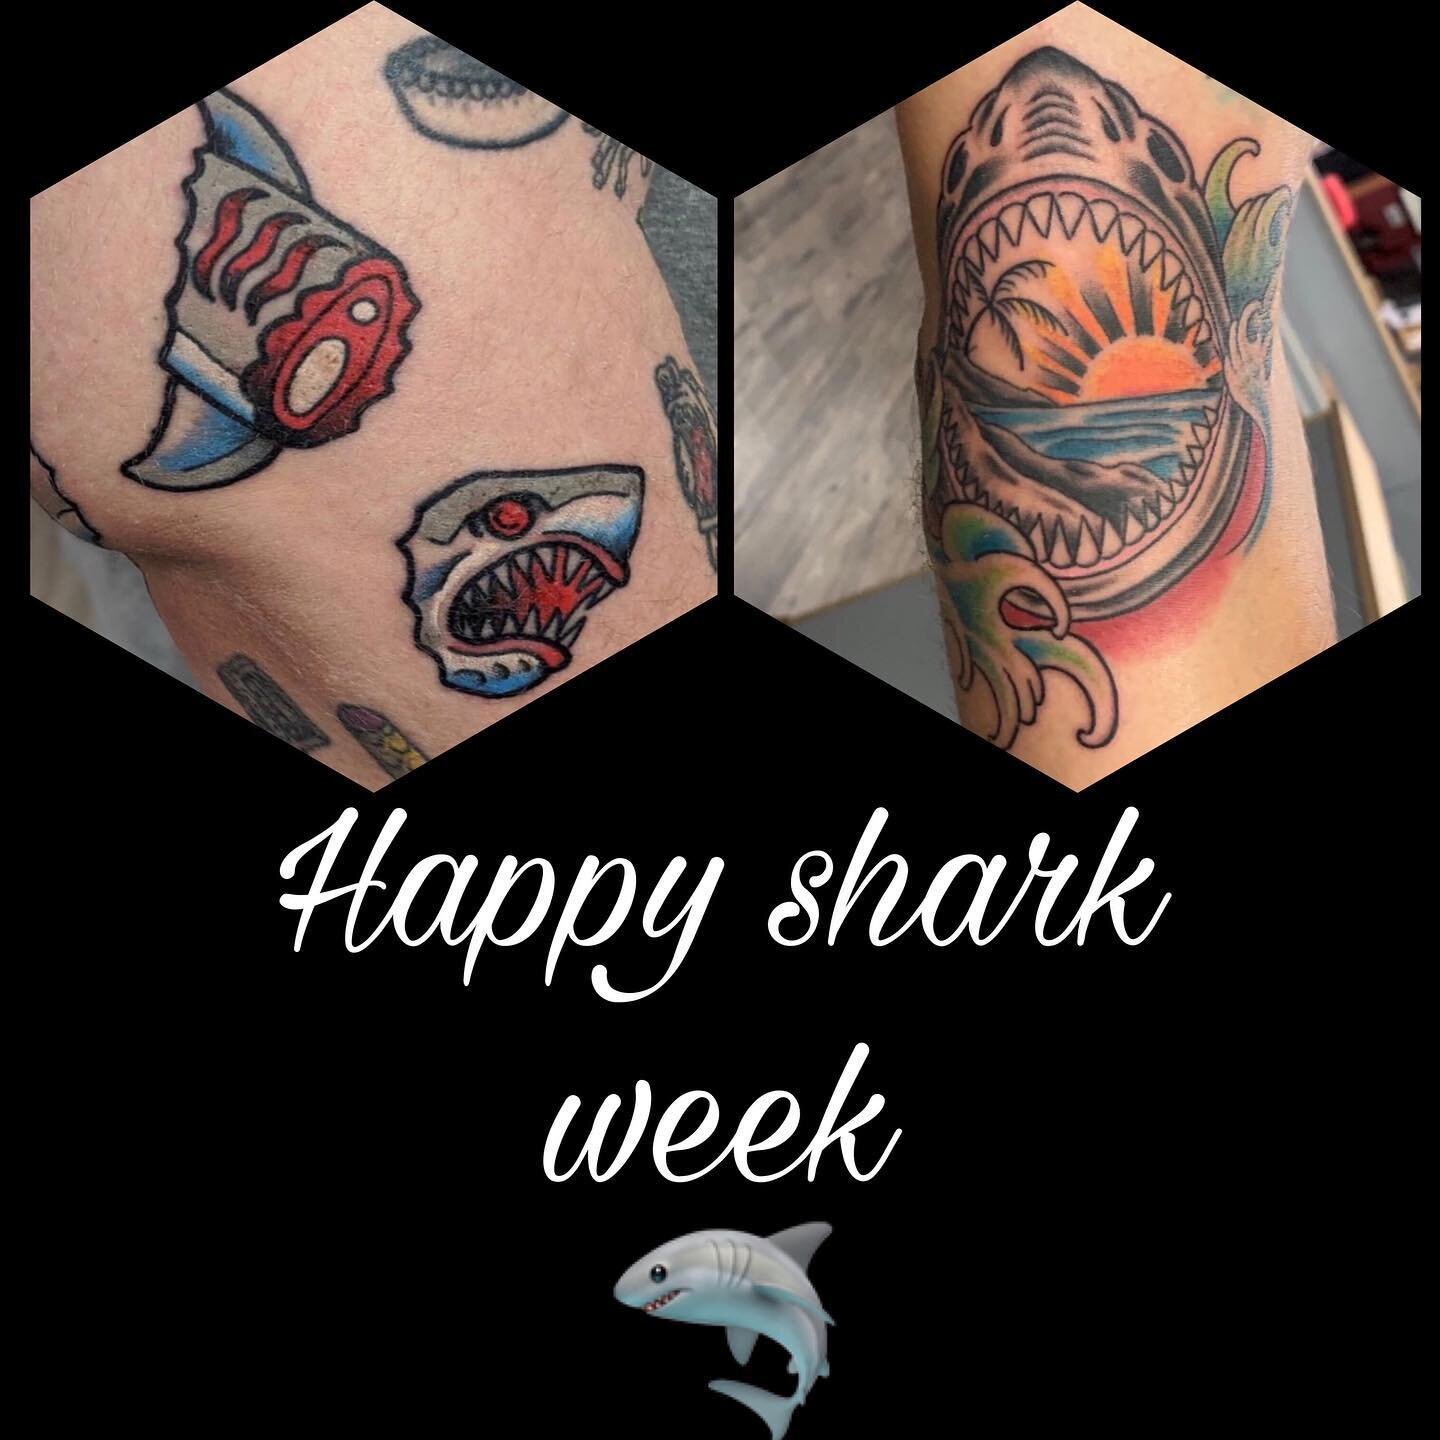 Here&rsquo;s some shark attacks made by @bdobiastattoos &amp; @tattoosbymattnelson 🦈 

#sharkweek #sharkweek2020 #sharkattack #sharktattoo #sharkfishing #lrtc #lightningrevivaltattoo #lightningrevivaltattoocompany #lightningrevival #michigan #westmi